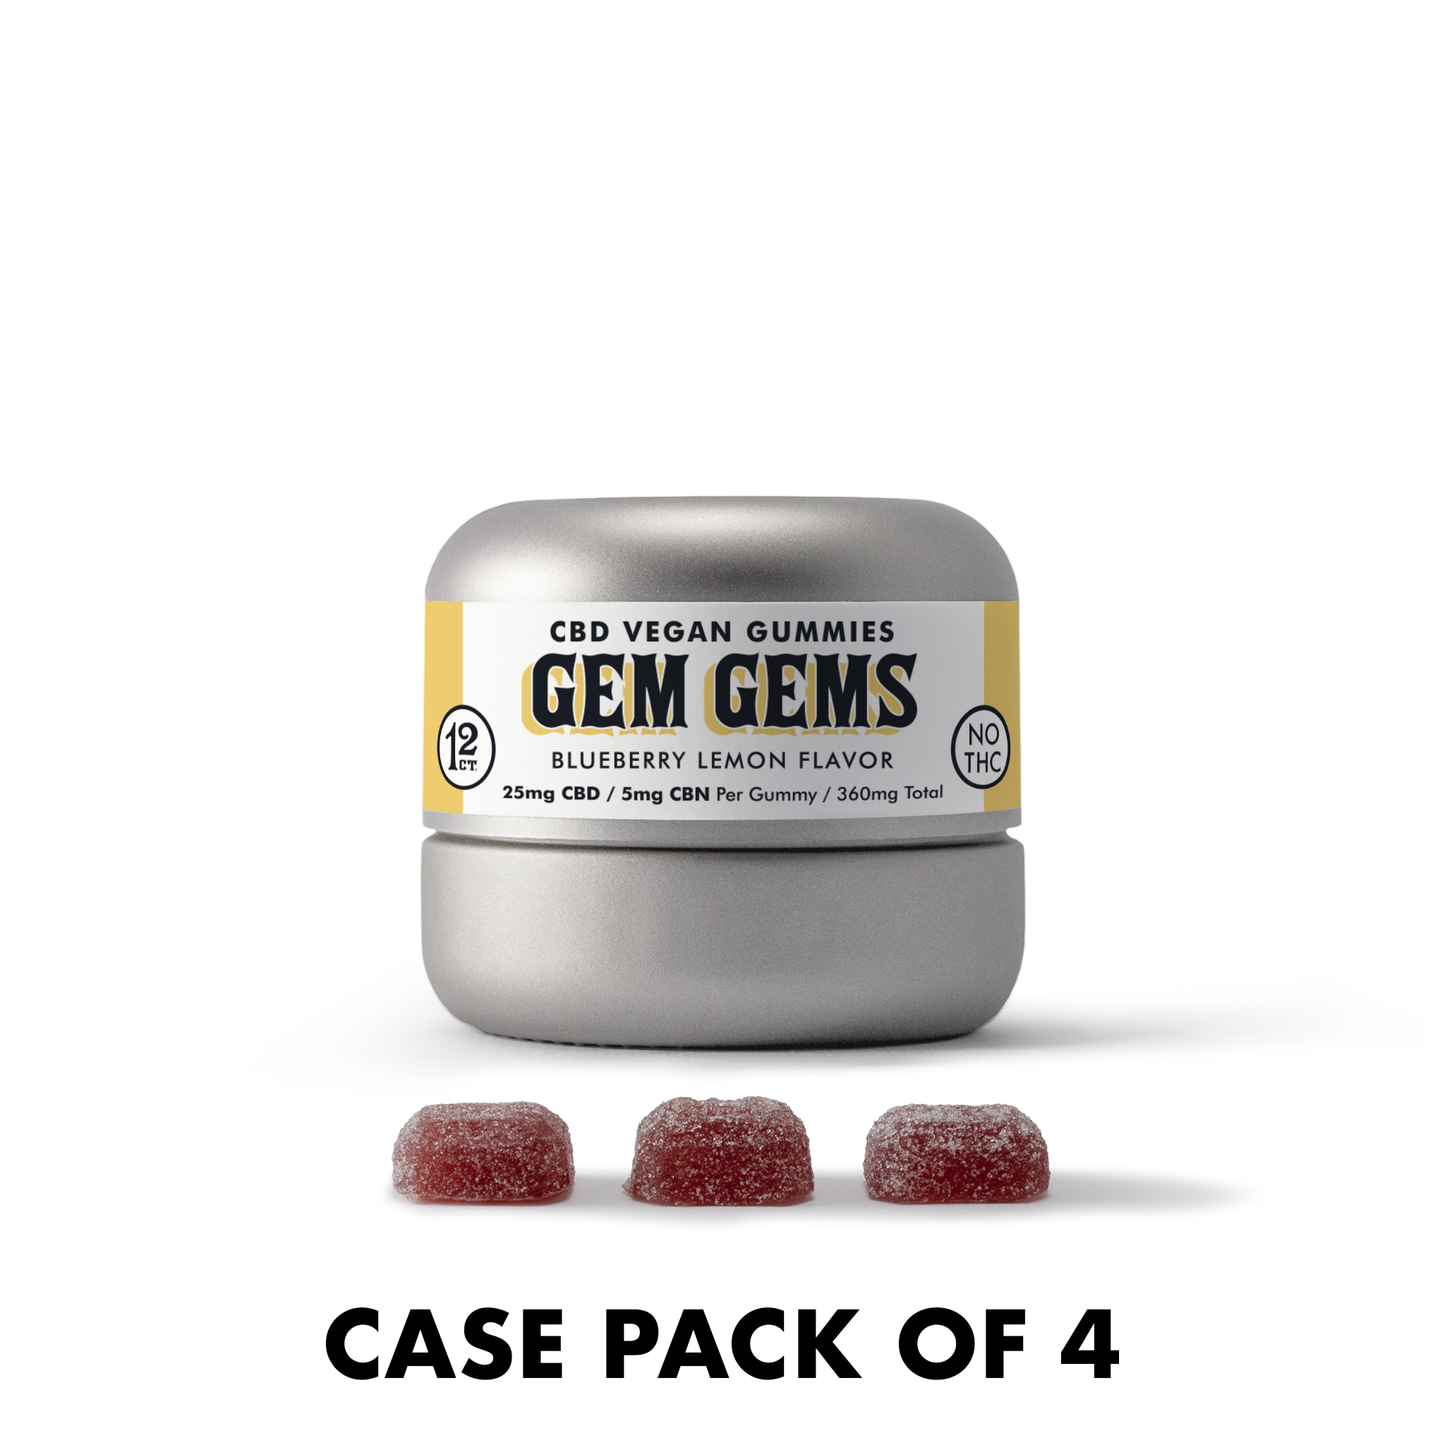 GEM GEMS - 12 ct 25 mg CBD/5 mg CBN Sabor a arándano y limón (caja de 4)